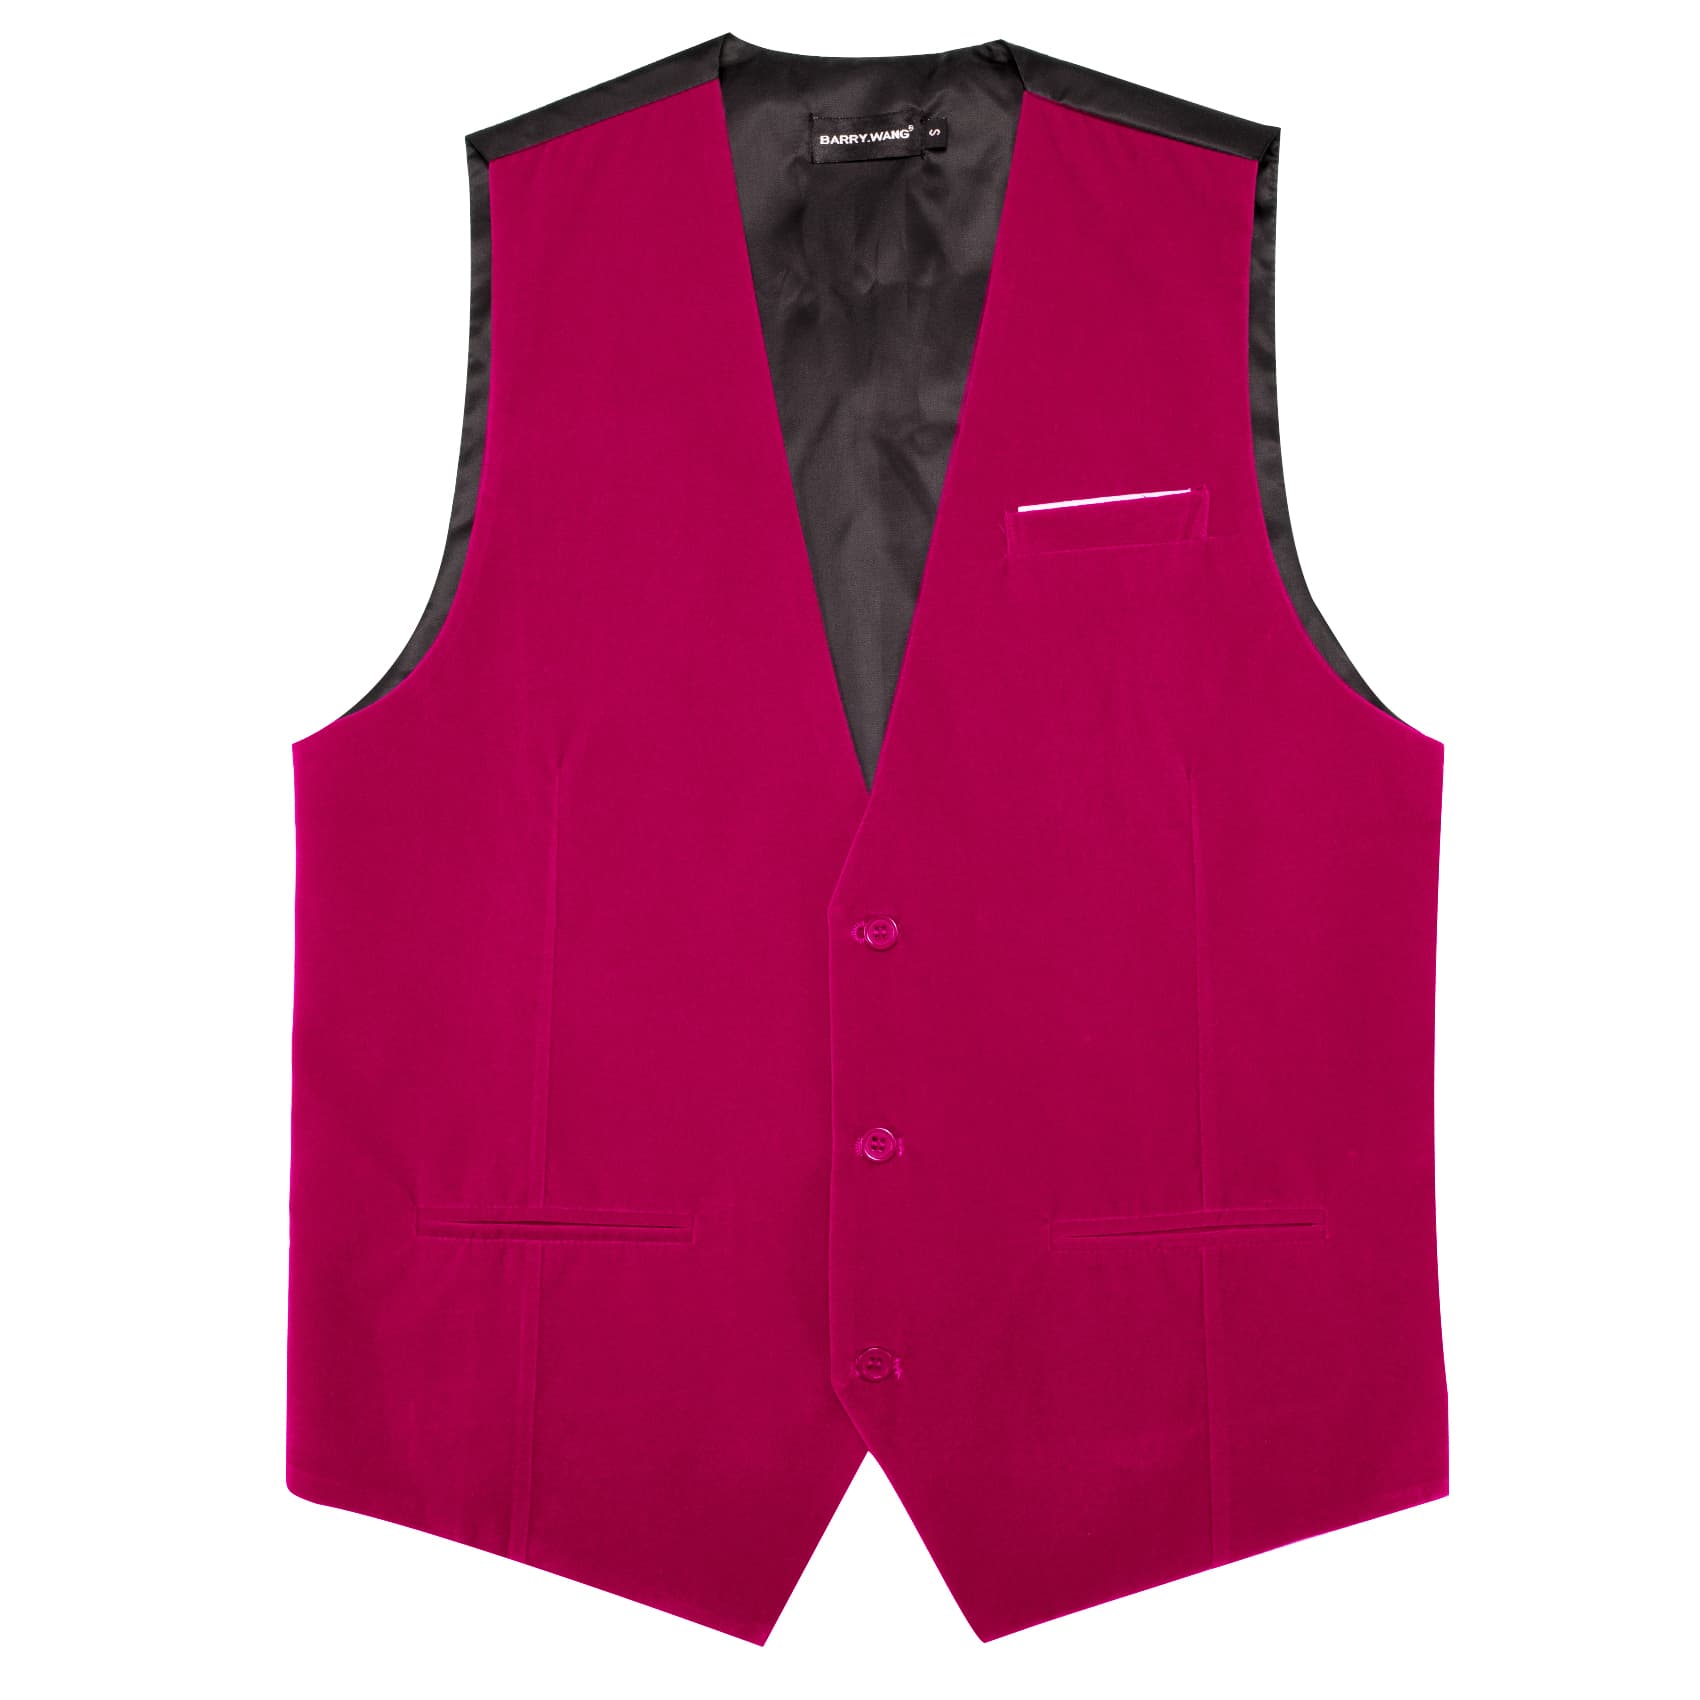 Barry Wang Waistcoat for Men Solid Deep Pink Velvet Vest